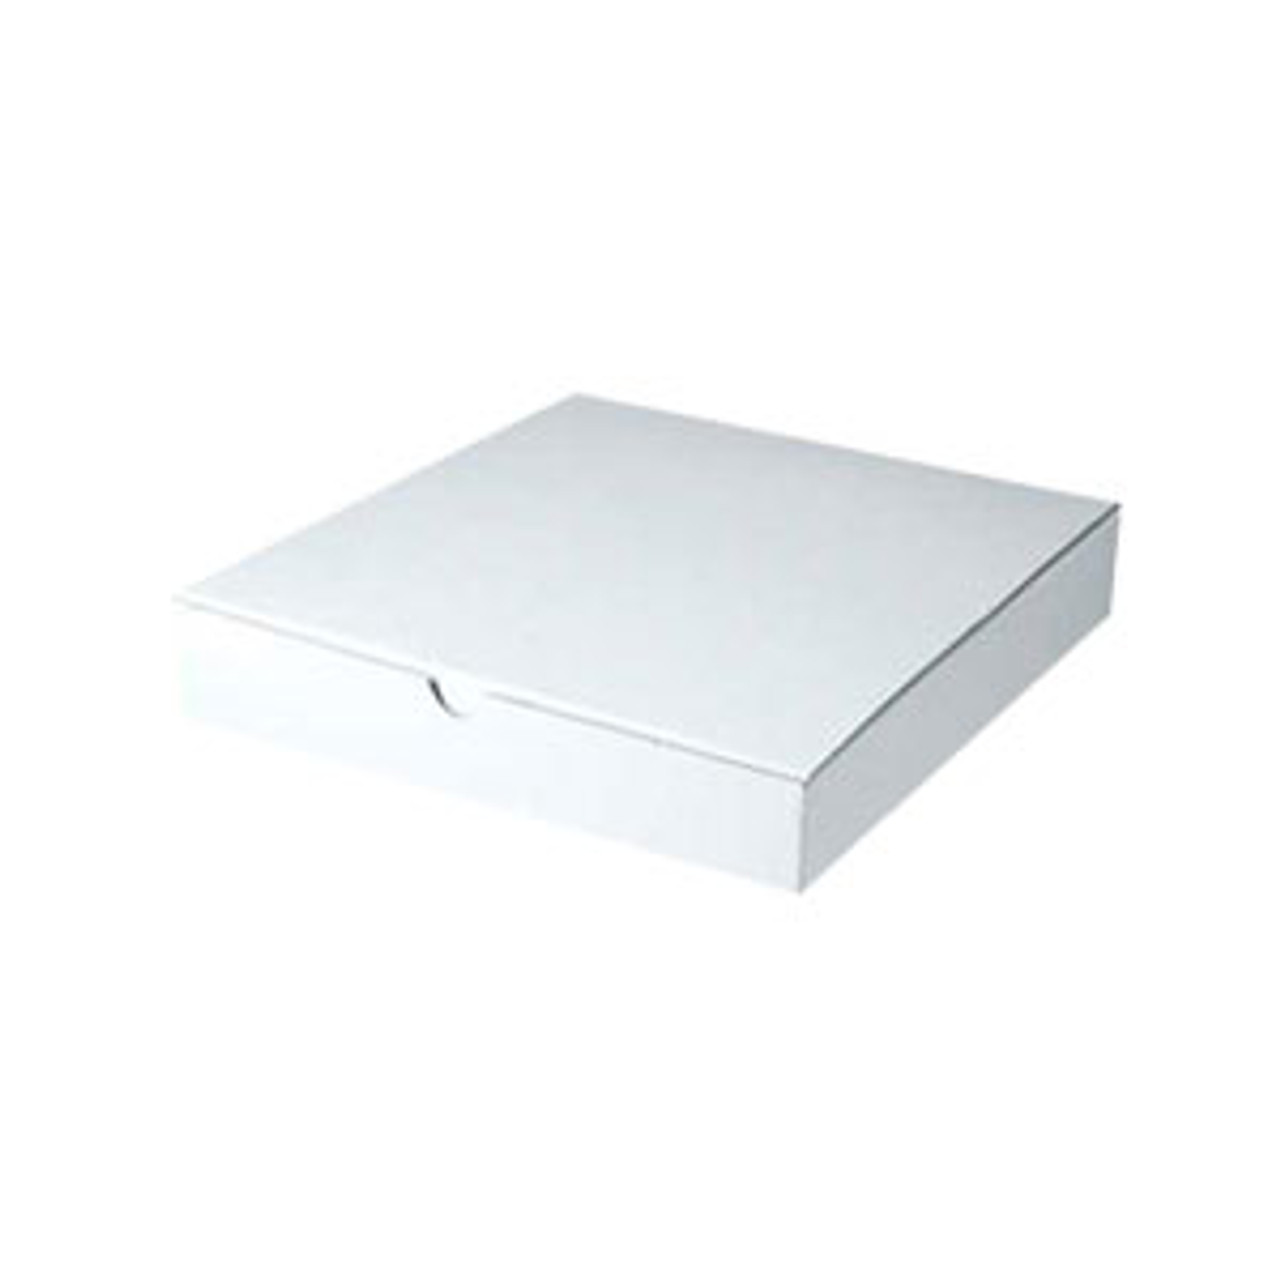 #82 White Pop N' Lock Giftware Box - 8.5"w x 8.5"d x 2"h